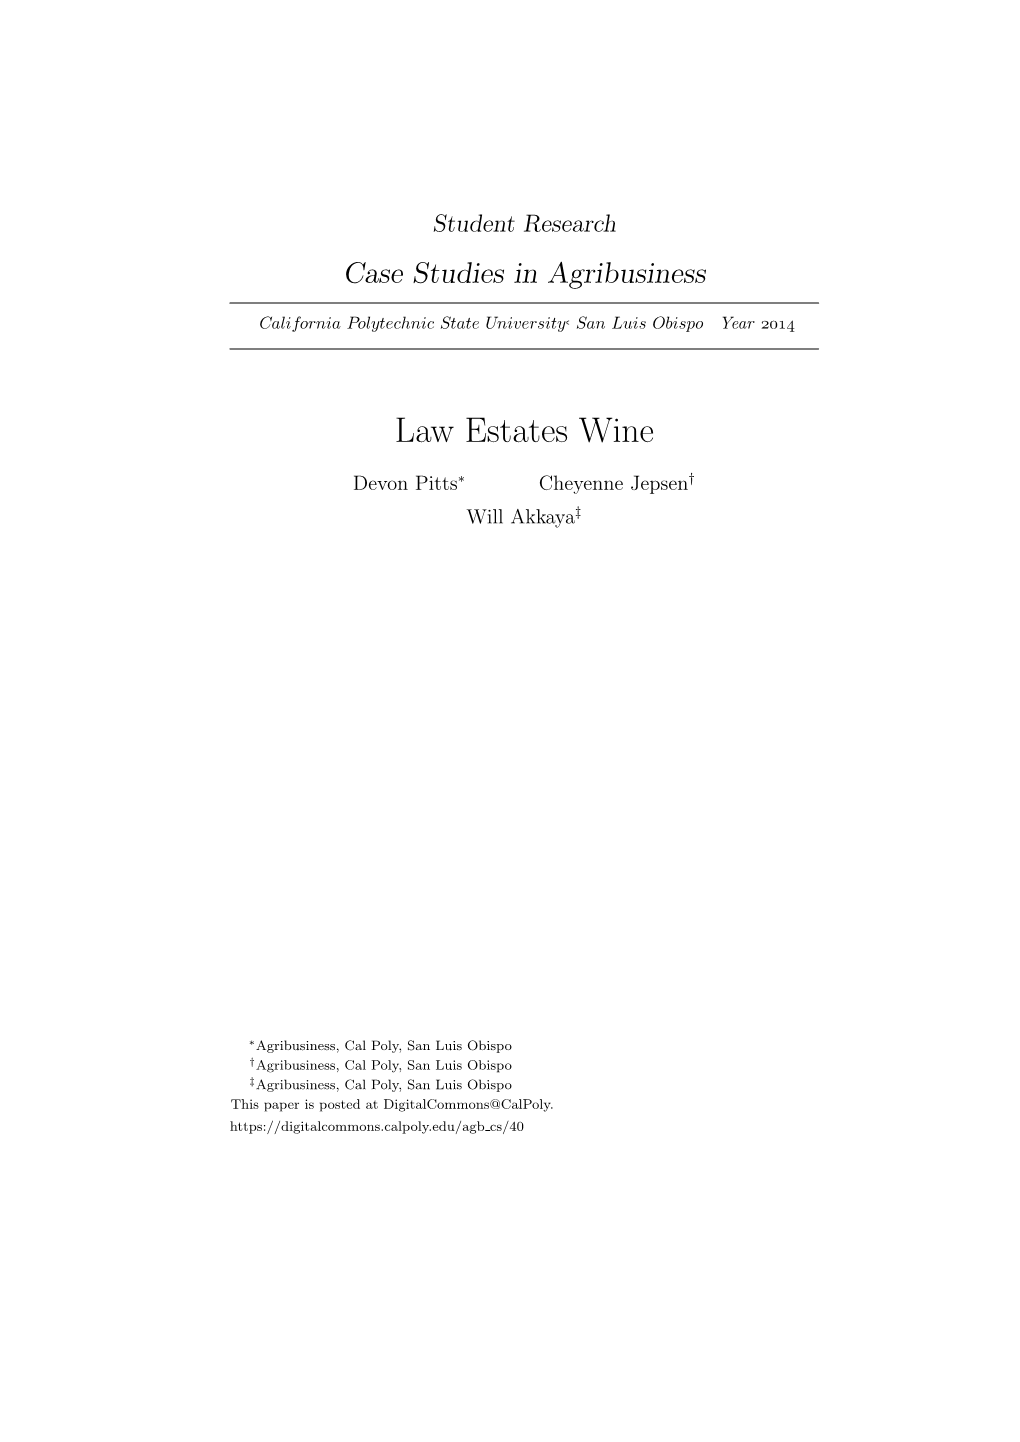 Law Estates Wine